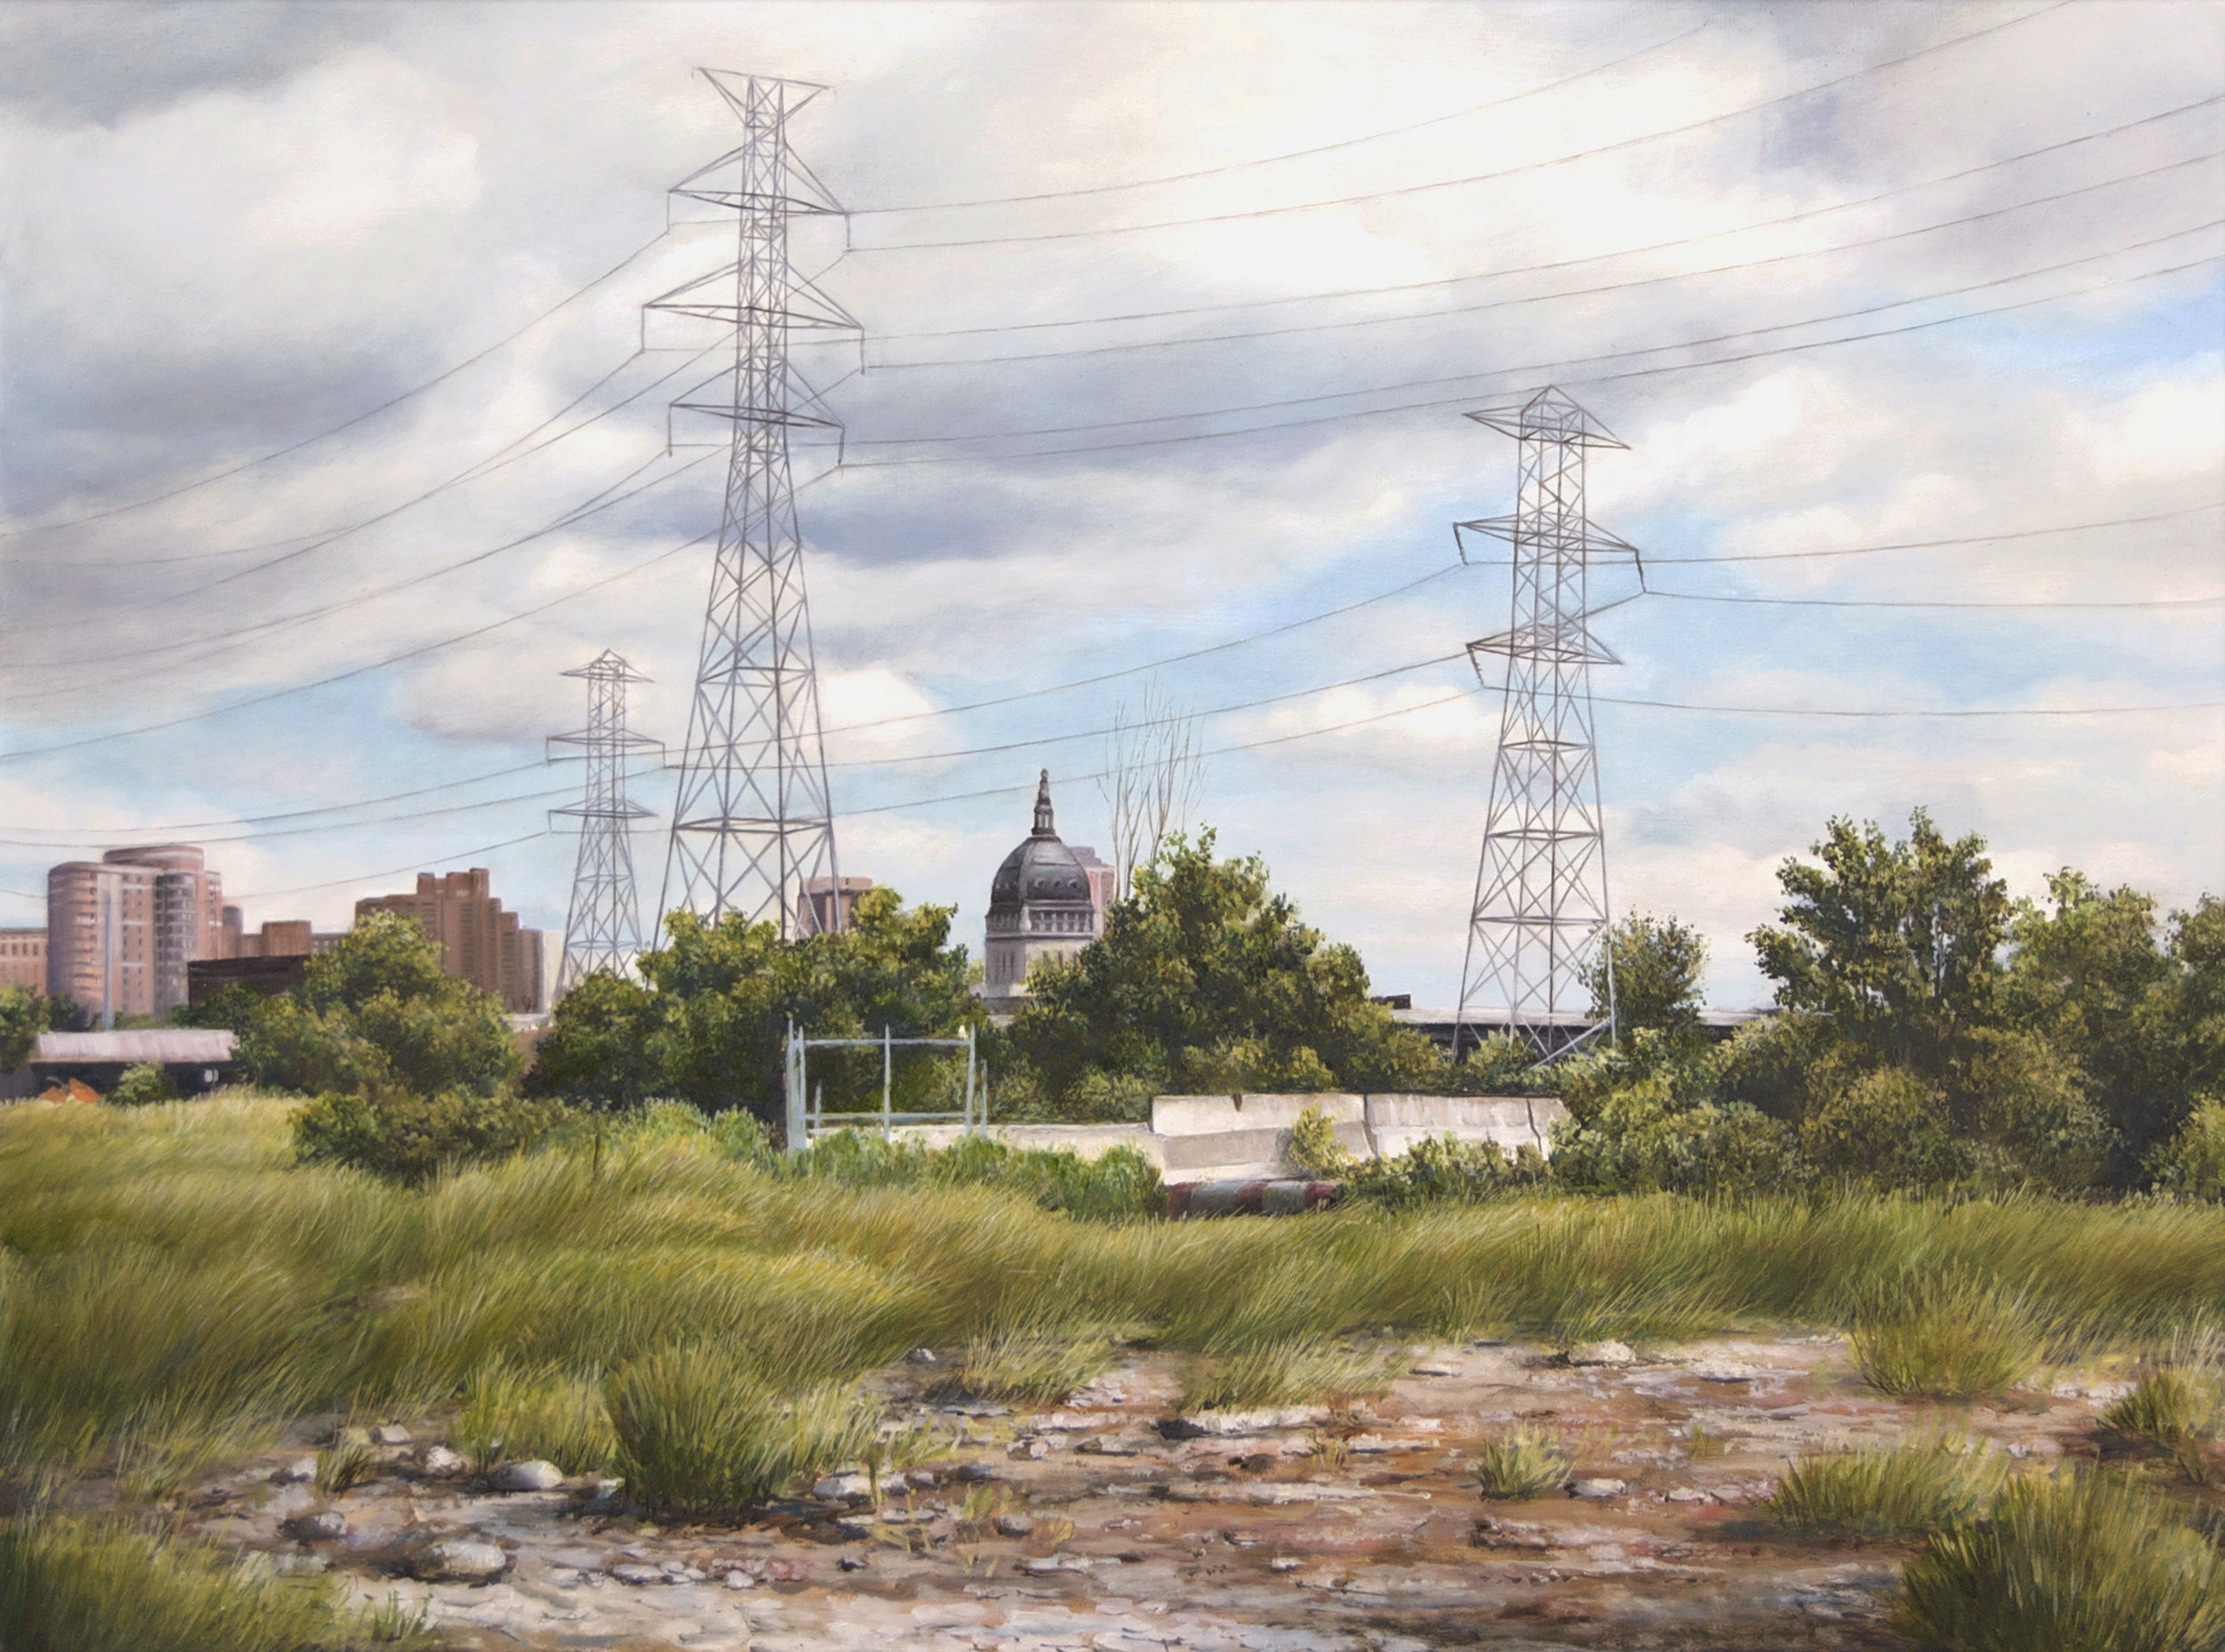   View toward the Basilica,    Minneapolis   2014  Oil on panel  18 x 24 inches    